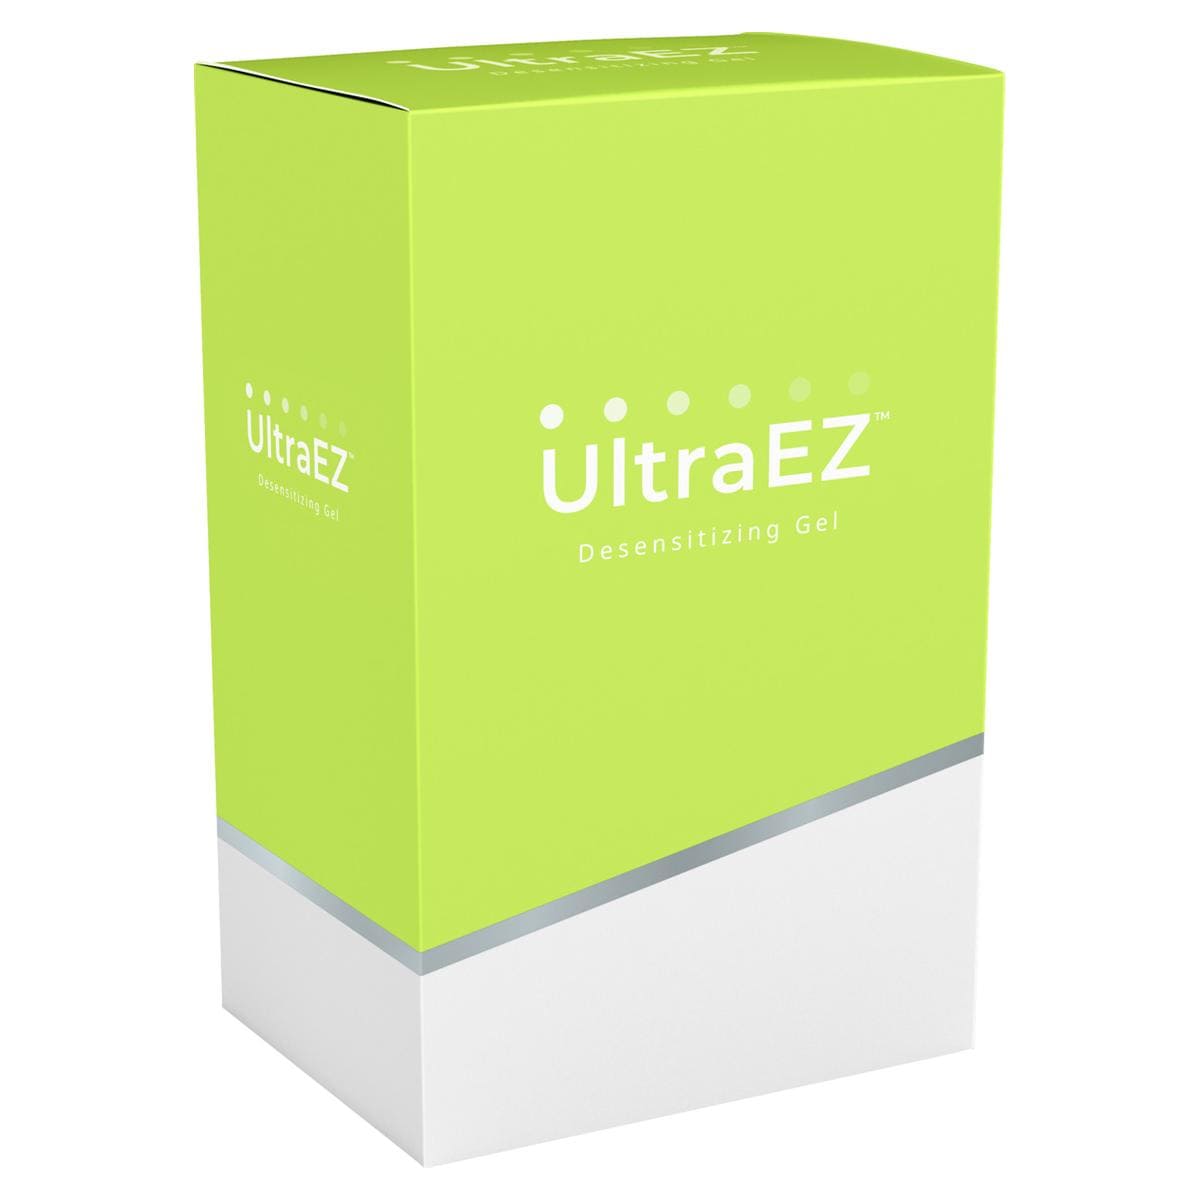 UltraEZ spuitjes - UP 1007, 20x 1,2 ml